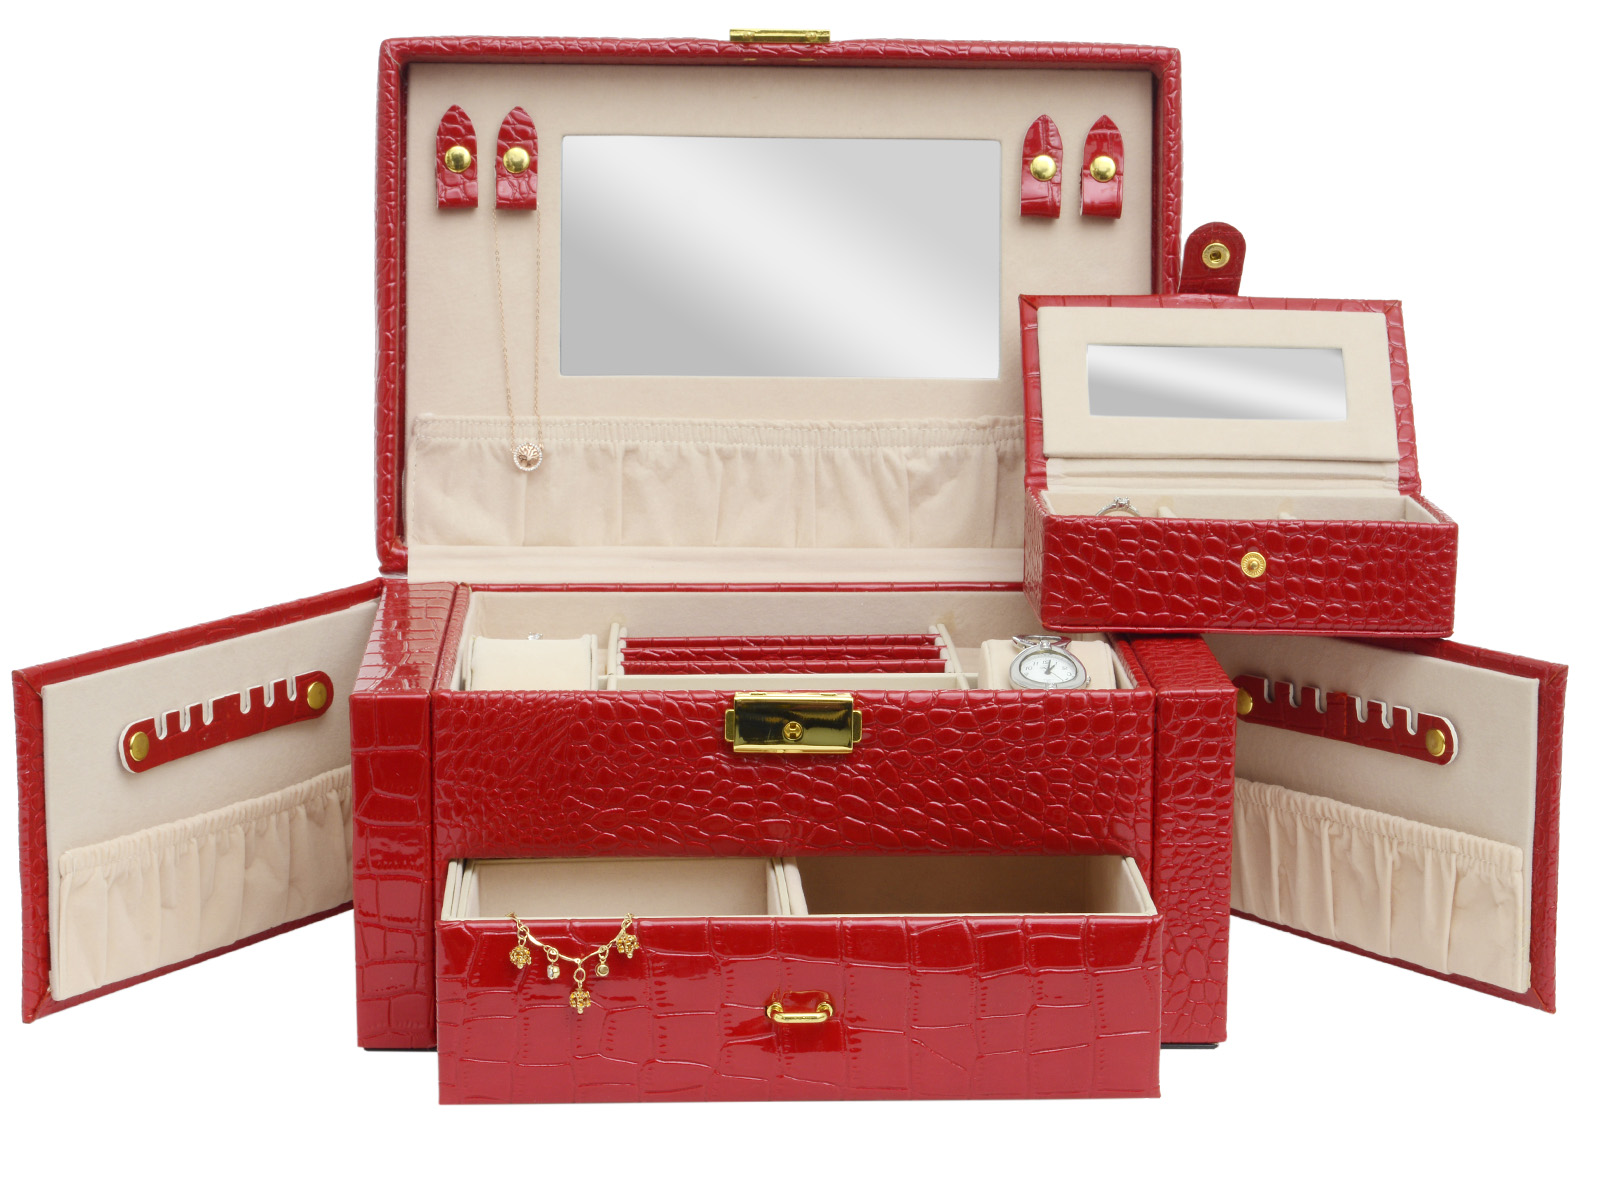 JK Box Honosná červená šperkovnica SP-950/A7